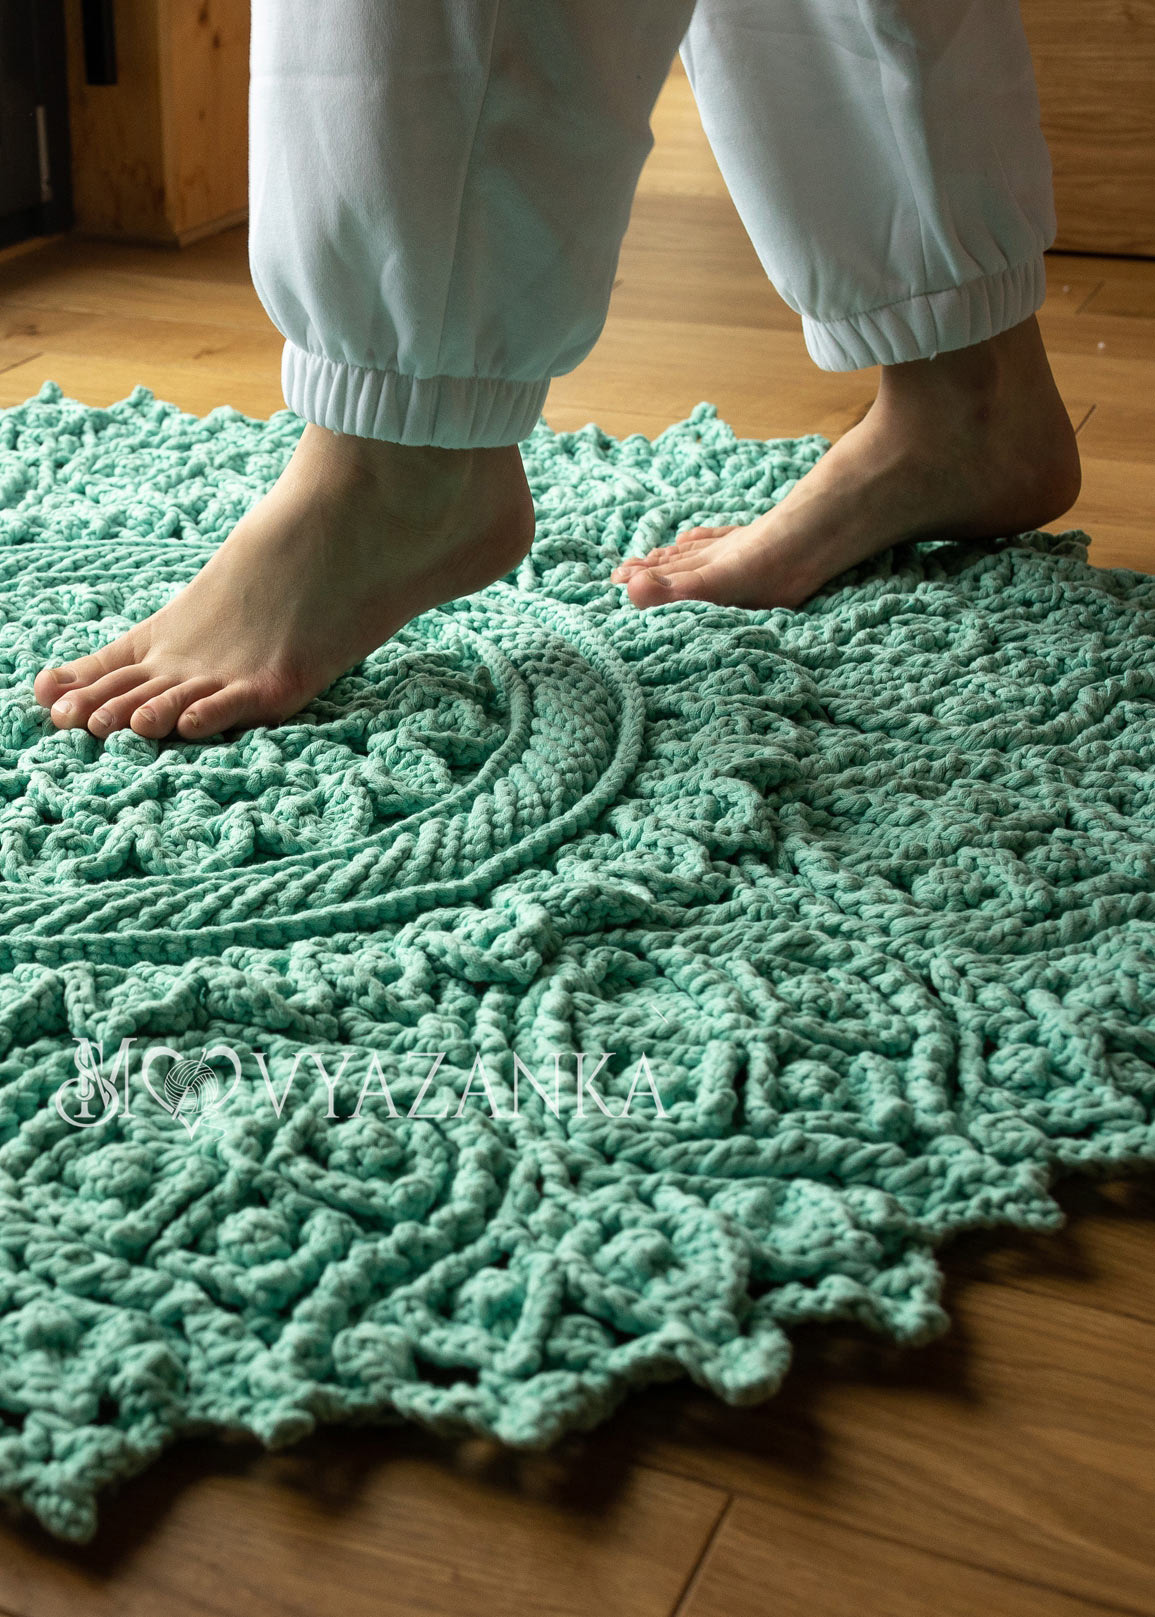 Crochet rug "Lace Blizzard" 105x105 cm., handmade, 100% cotton